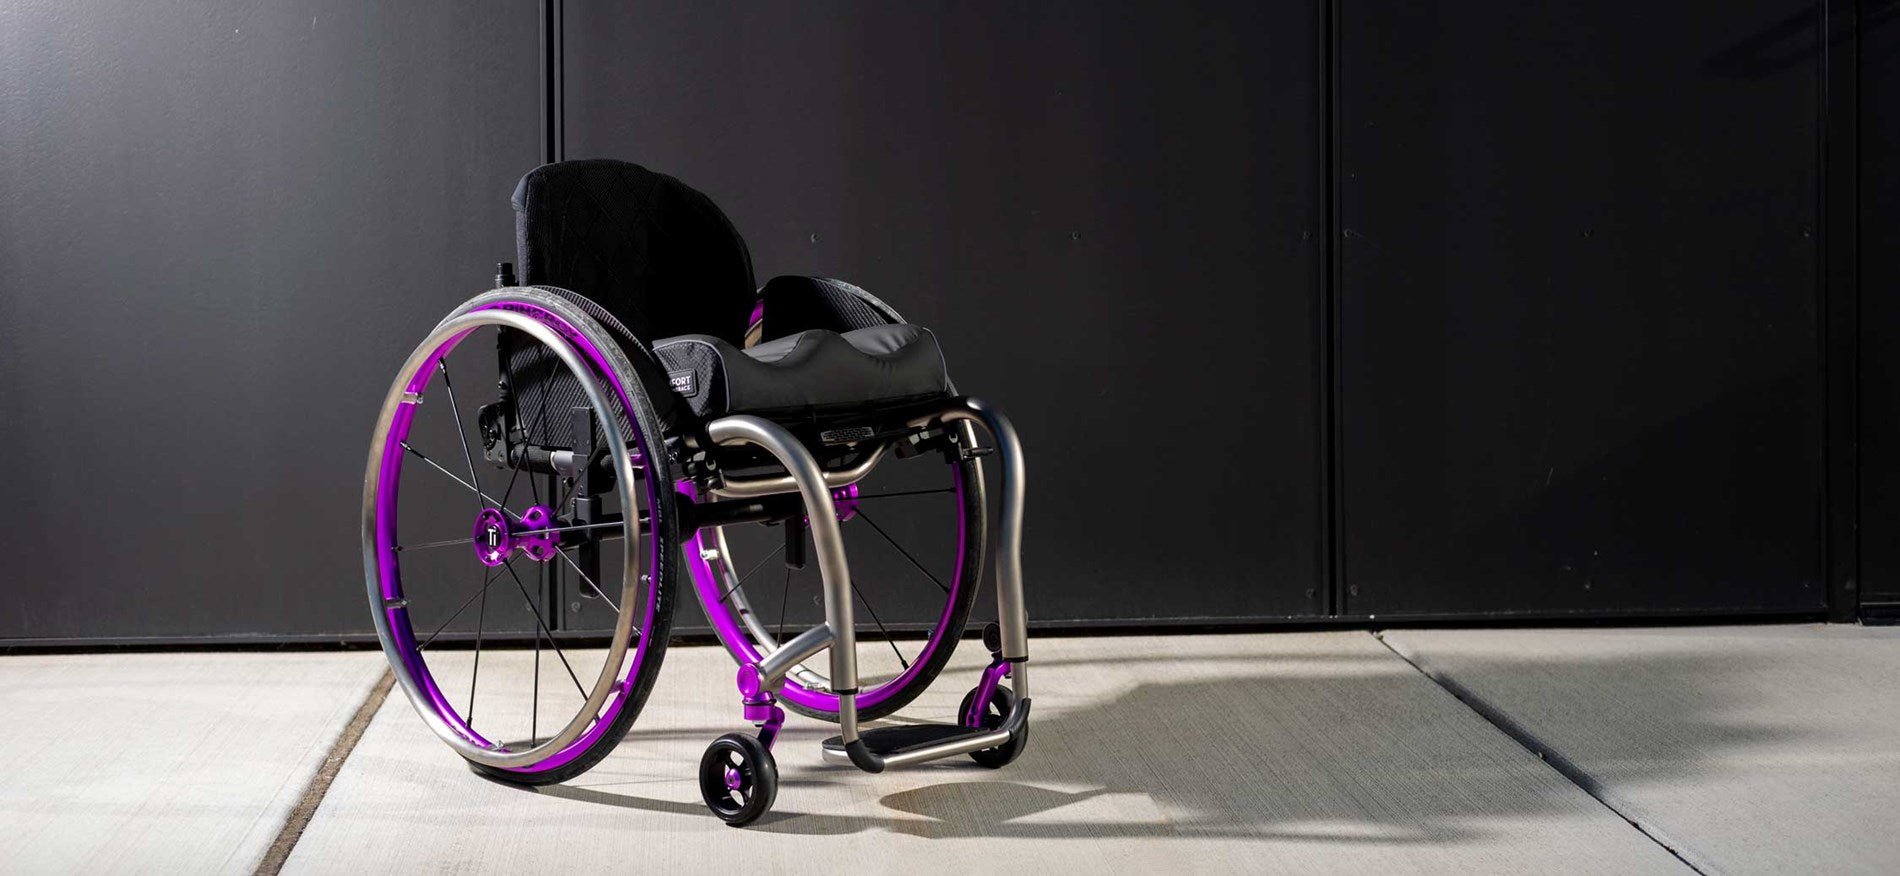 TiLite Wheelchairs - Beyond Mobility.